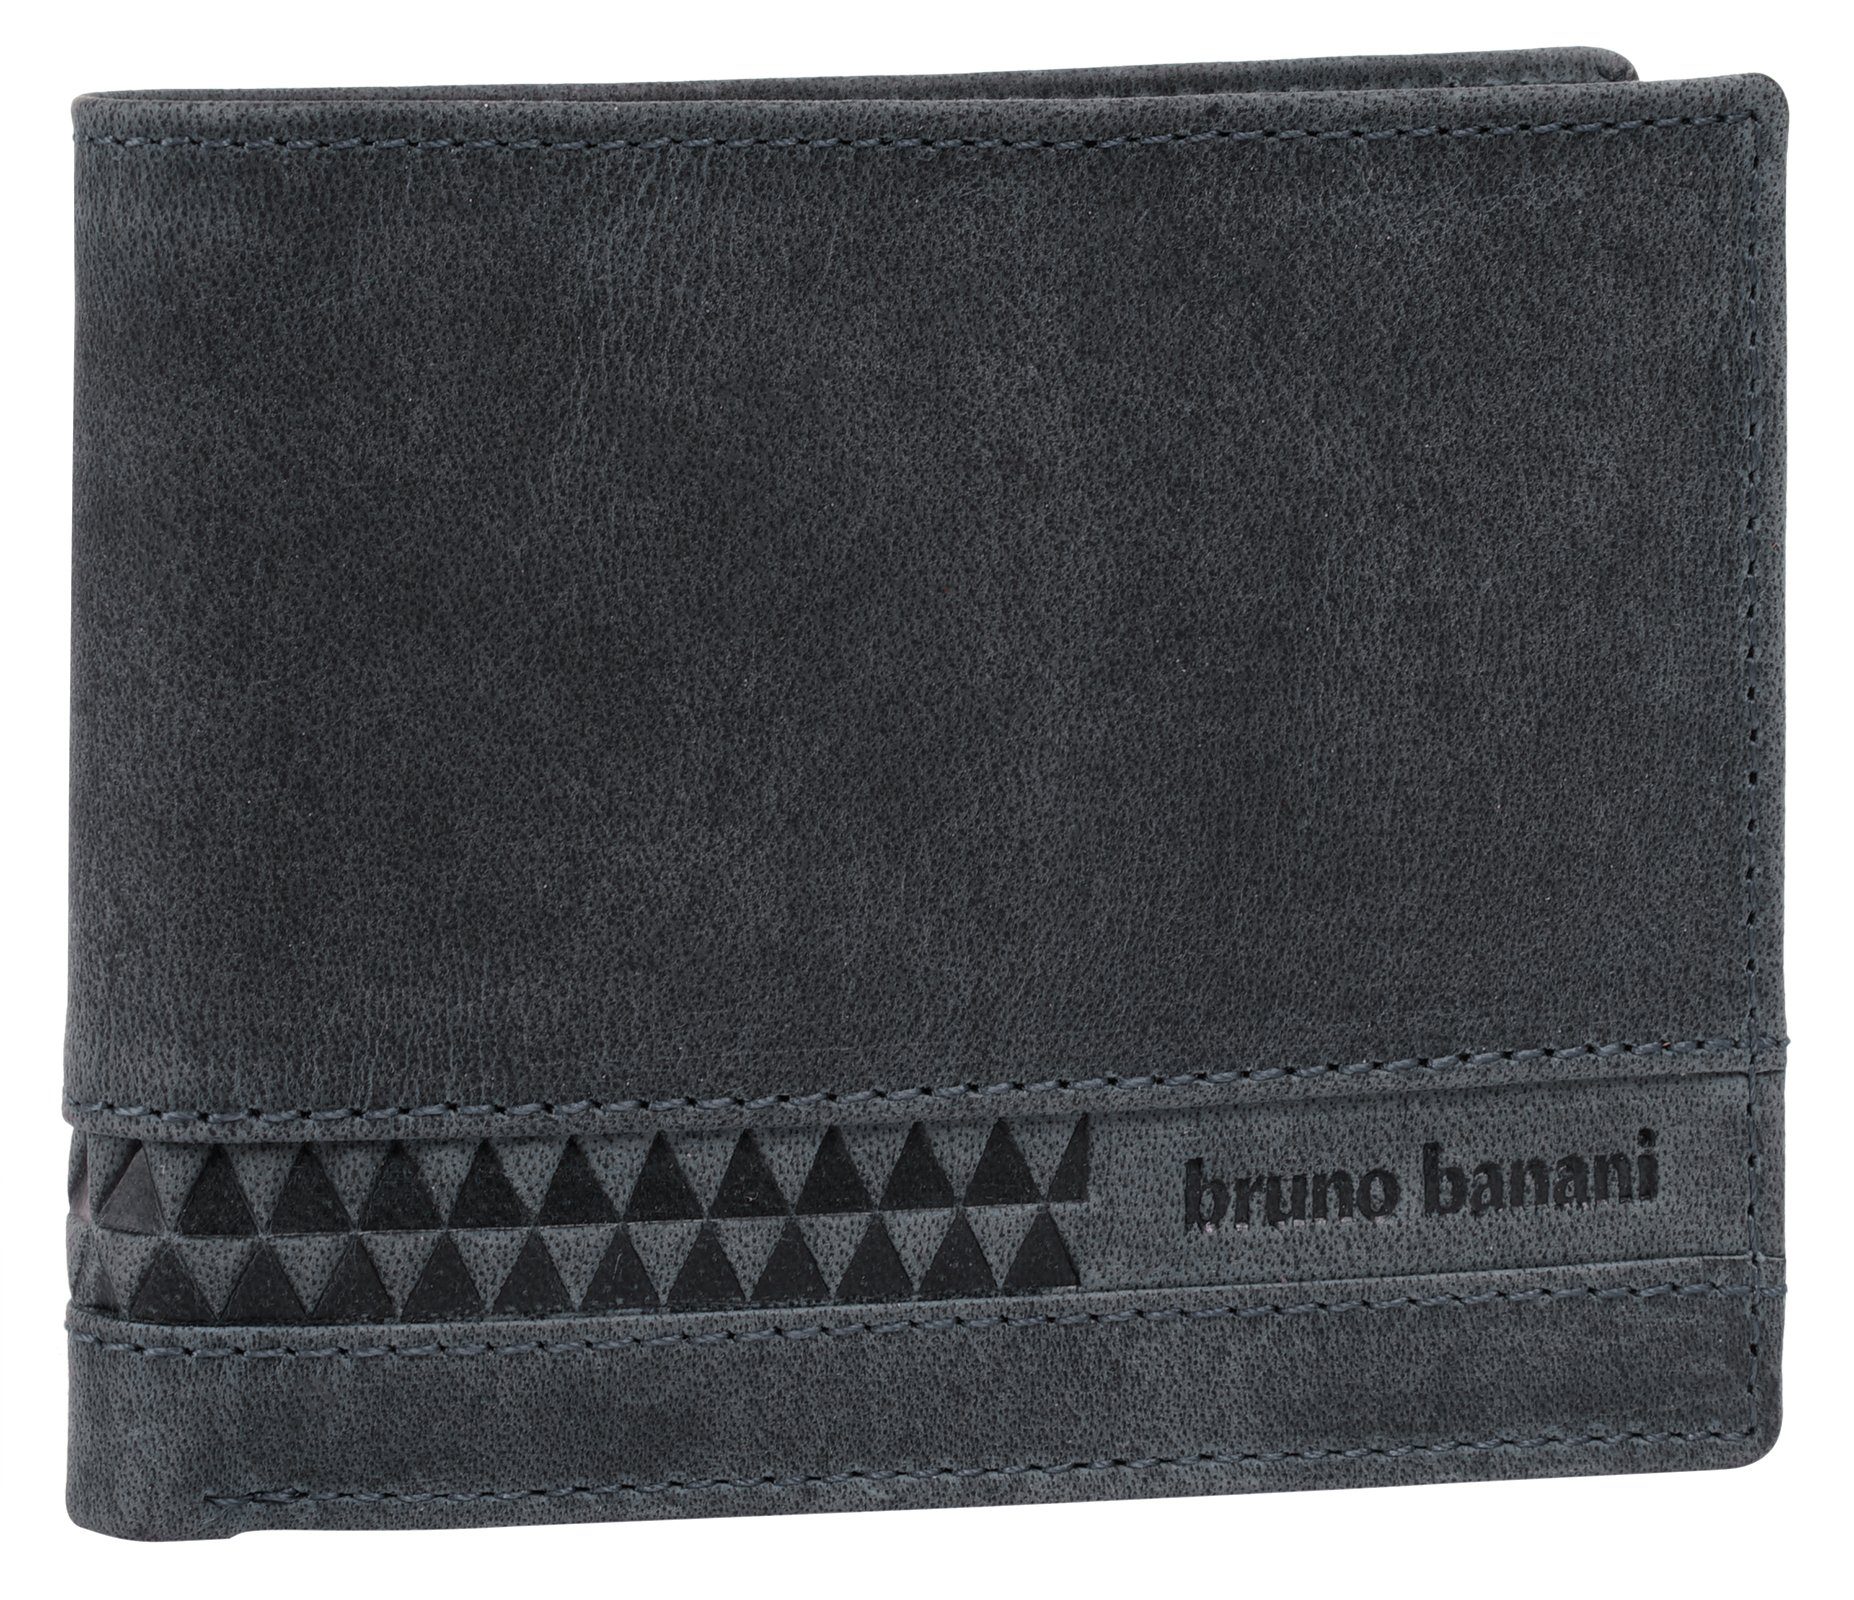 Banani Bruno blau Geldbörse, echt Leder